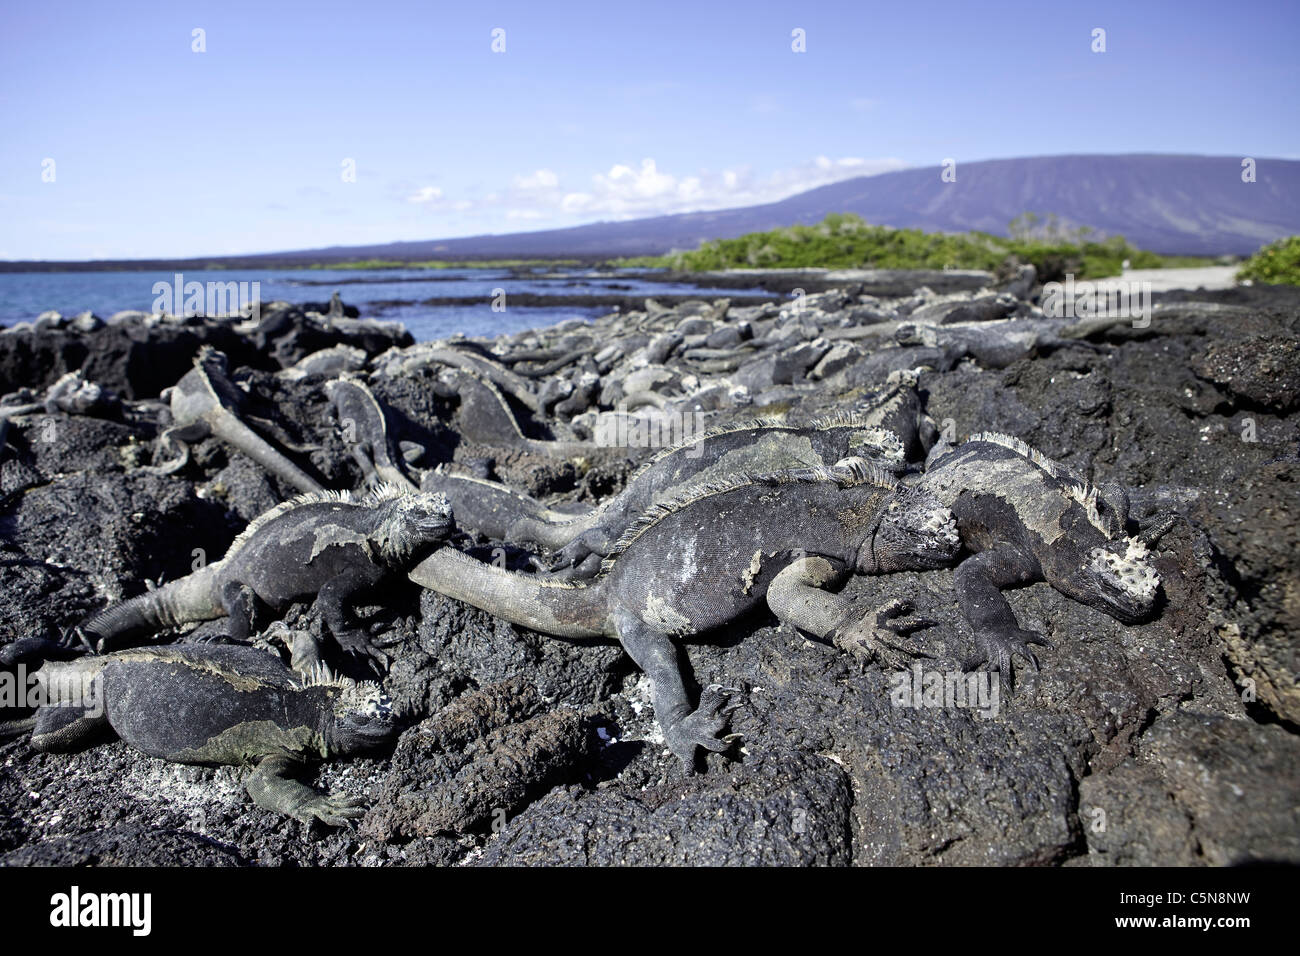 Gruppo di Galapagos iguane marine in riscaldamento, Amblyrhynchus cristatus, Fernandina Island, Galapagos, Ecuador Foto Stock